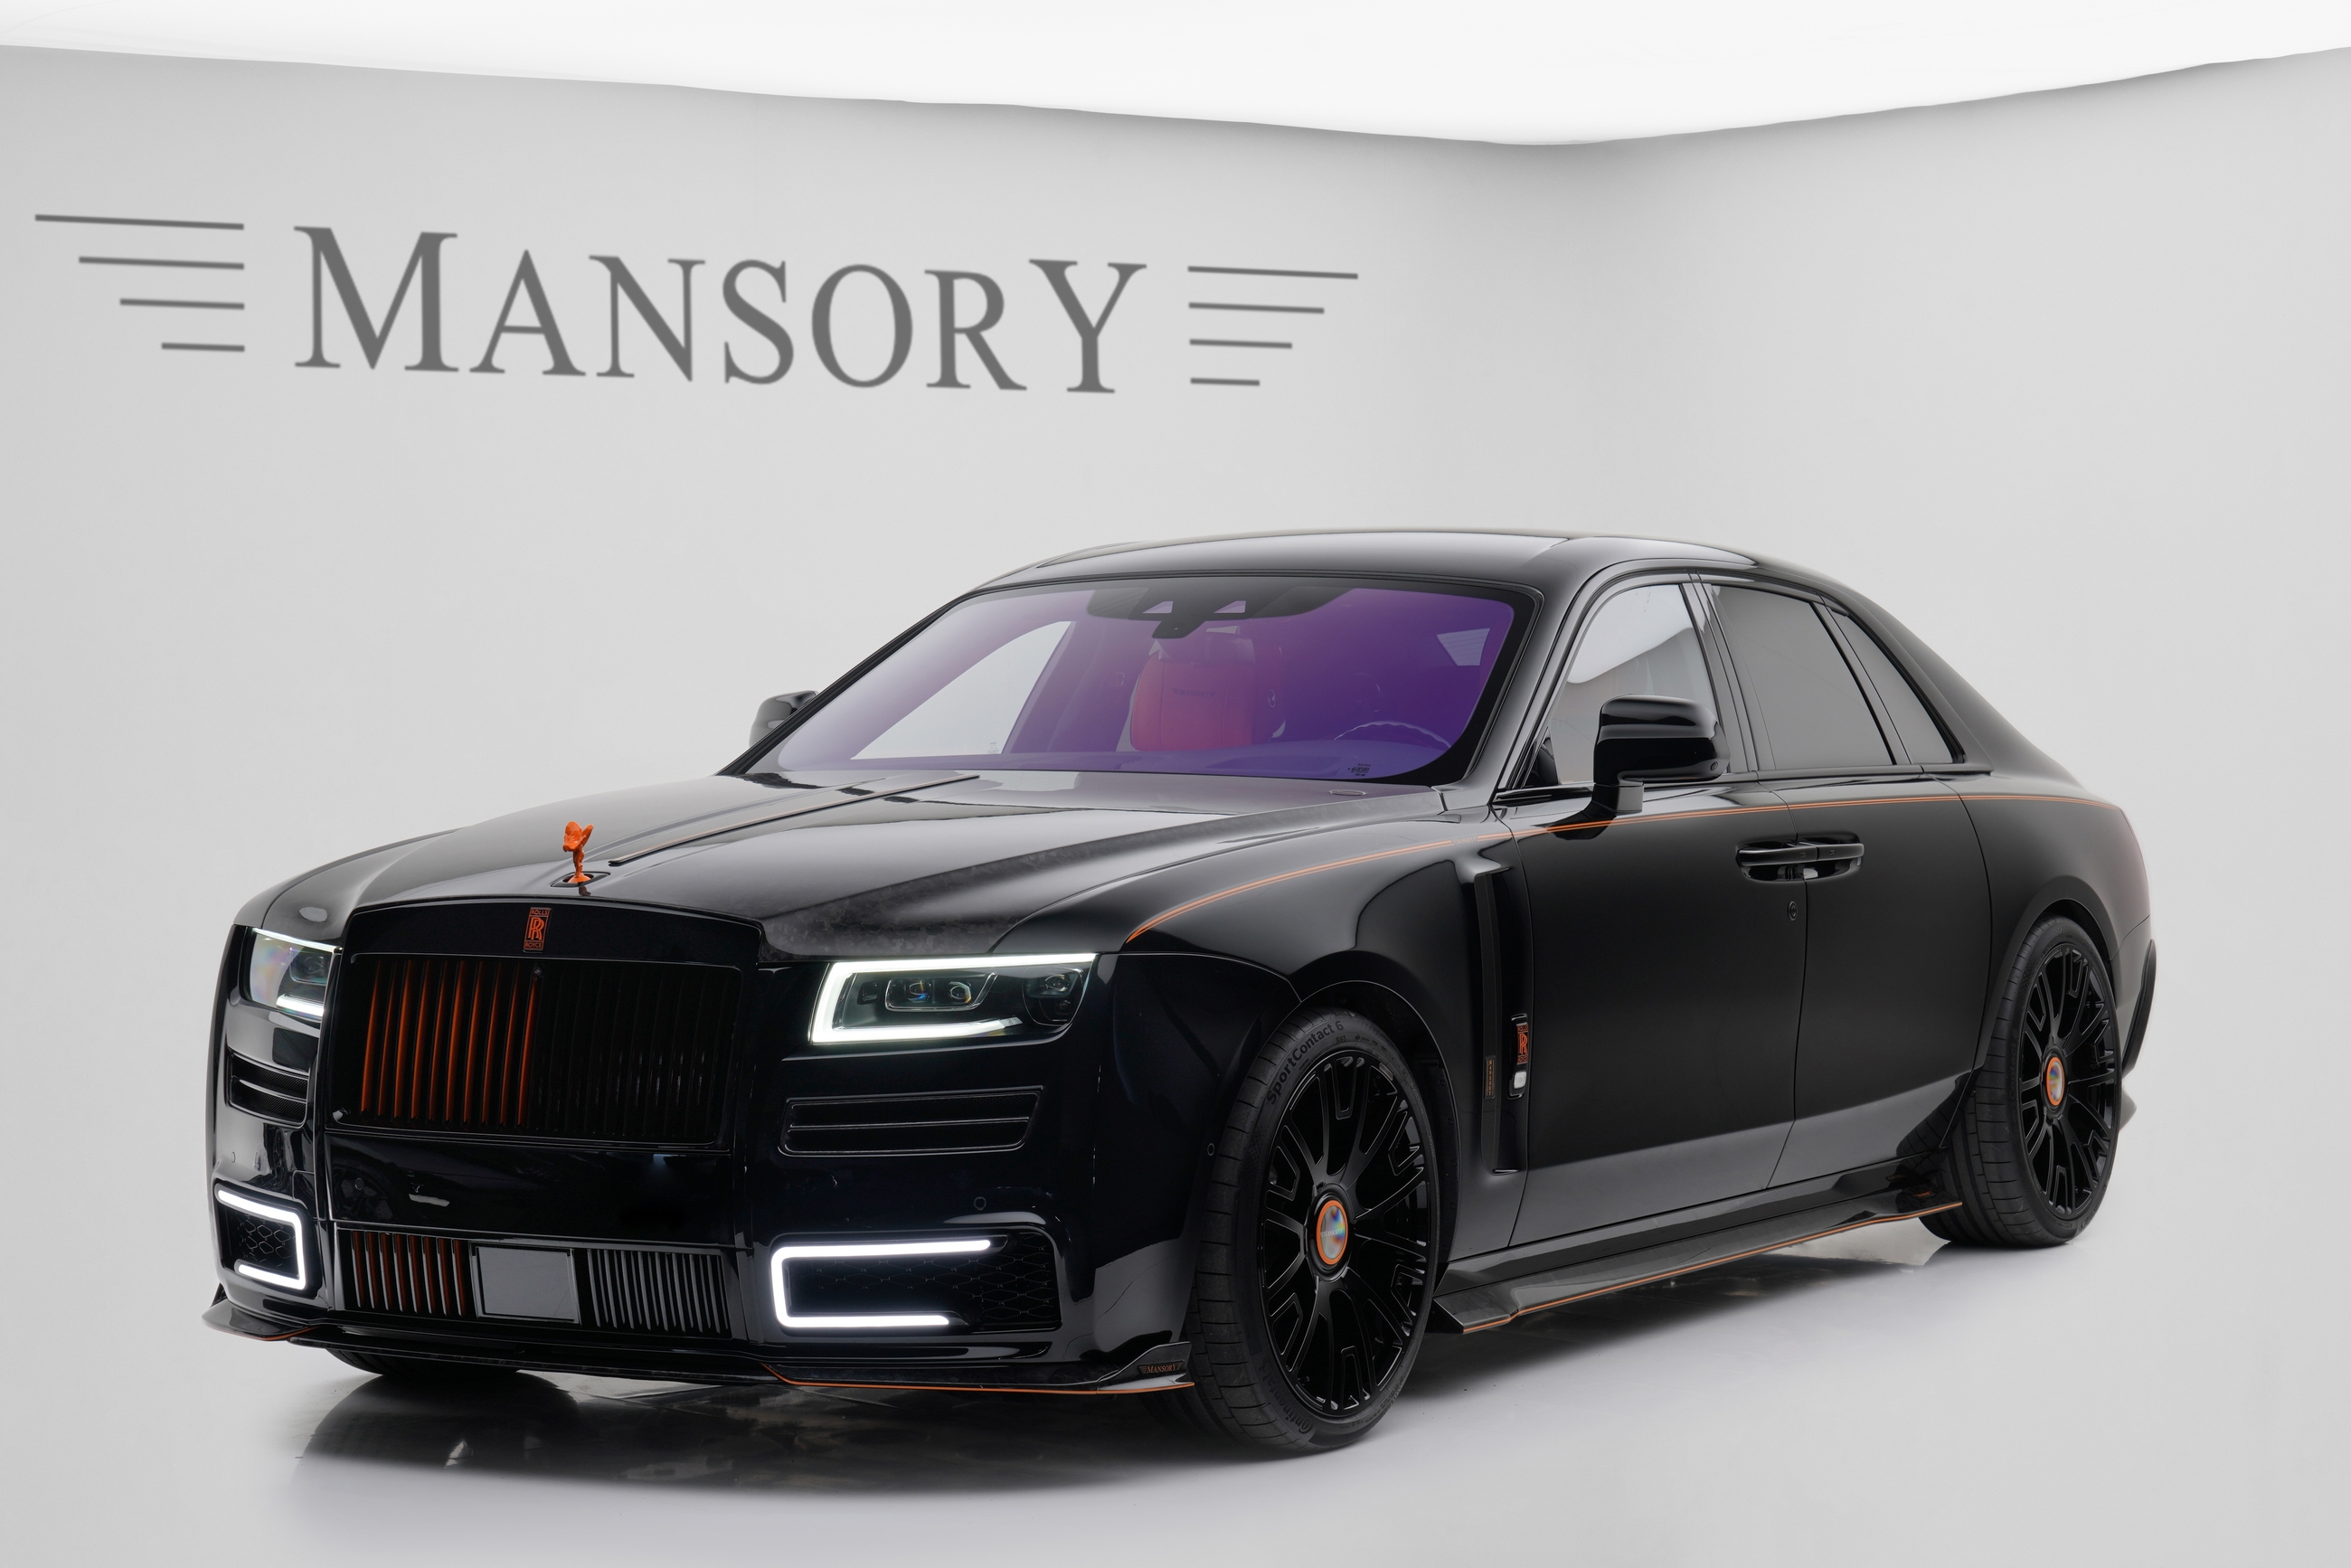 30 custom RollsRoyce Phantoms make their way to Macao  Rides  Drives